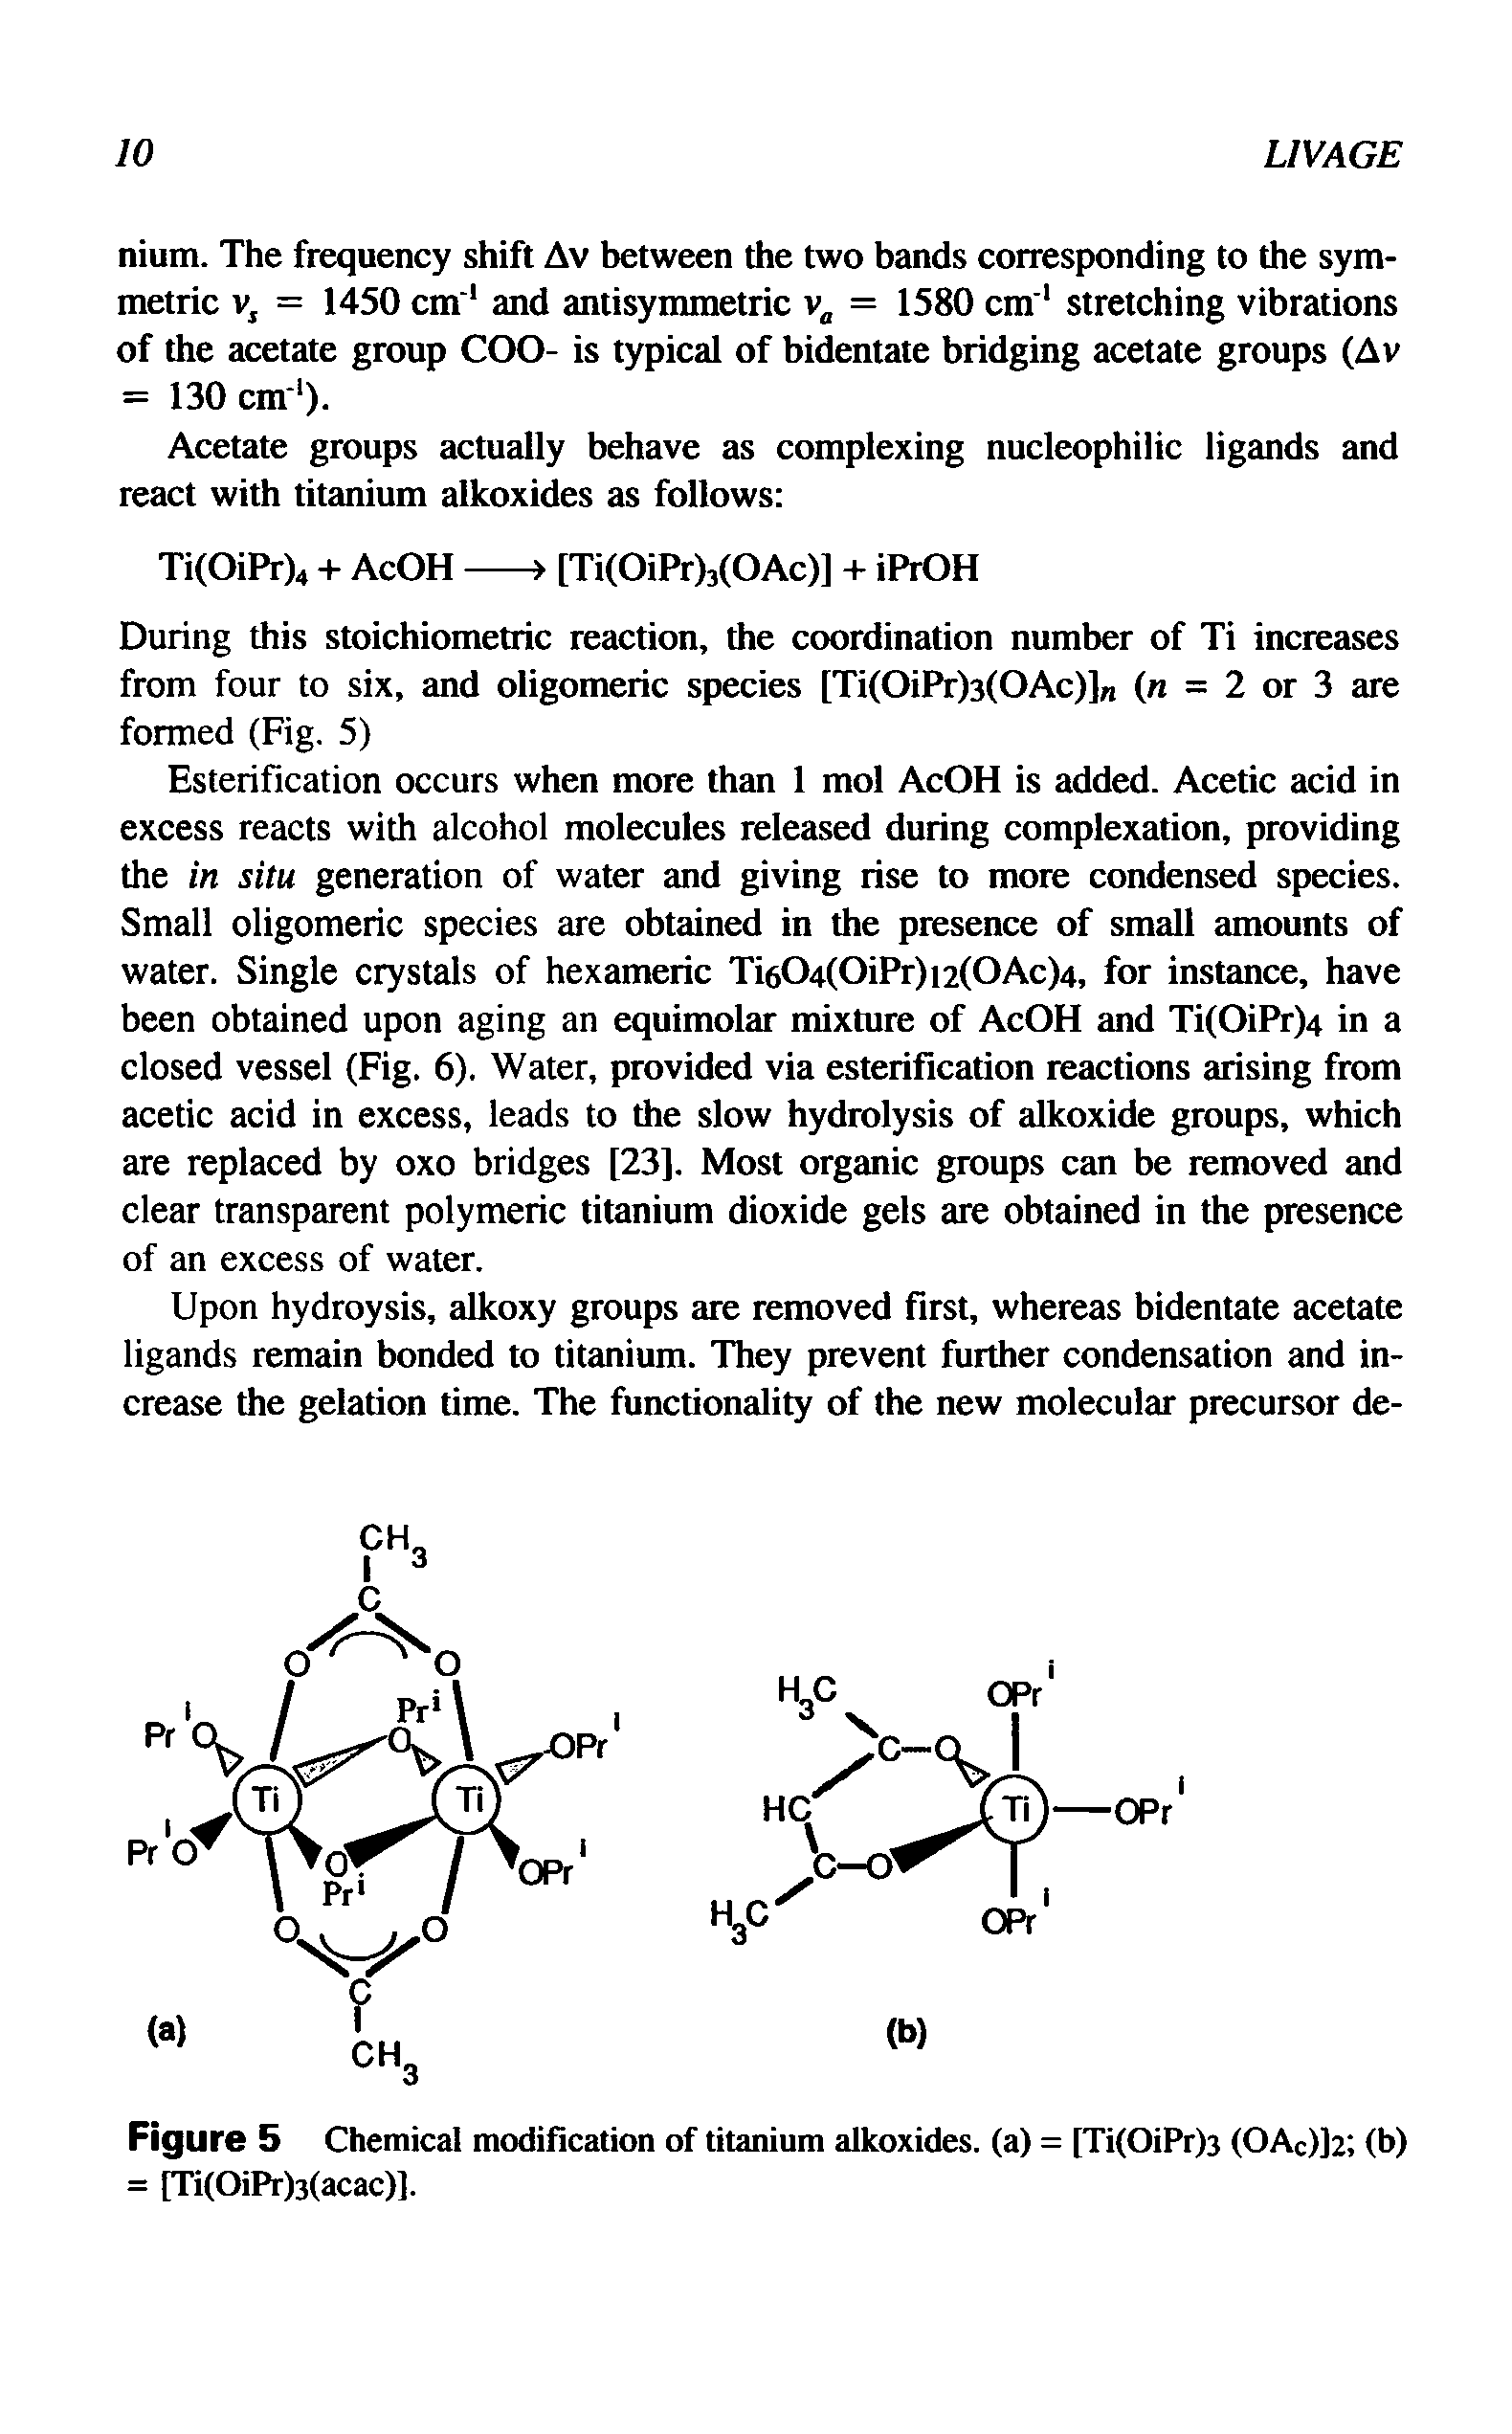 Figure 5 Chemical modification of titanium alkoxides. (a) = [Ti(OiPr)3 (OAc)]2 (b) = [Ti(OiPr)3(acac)].